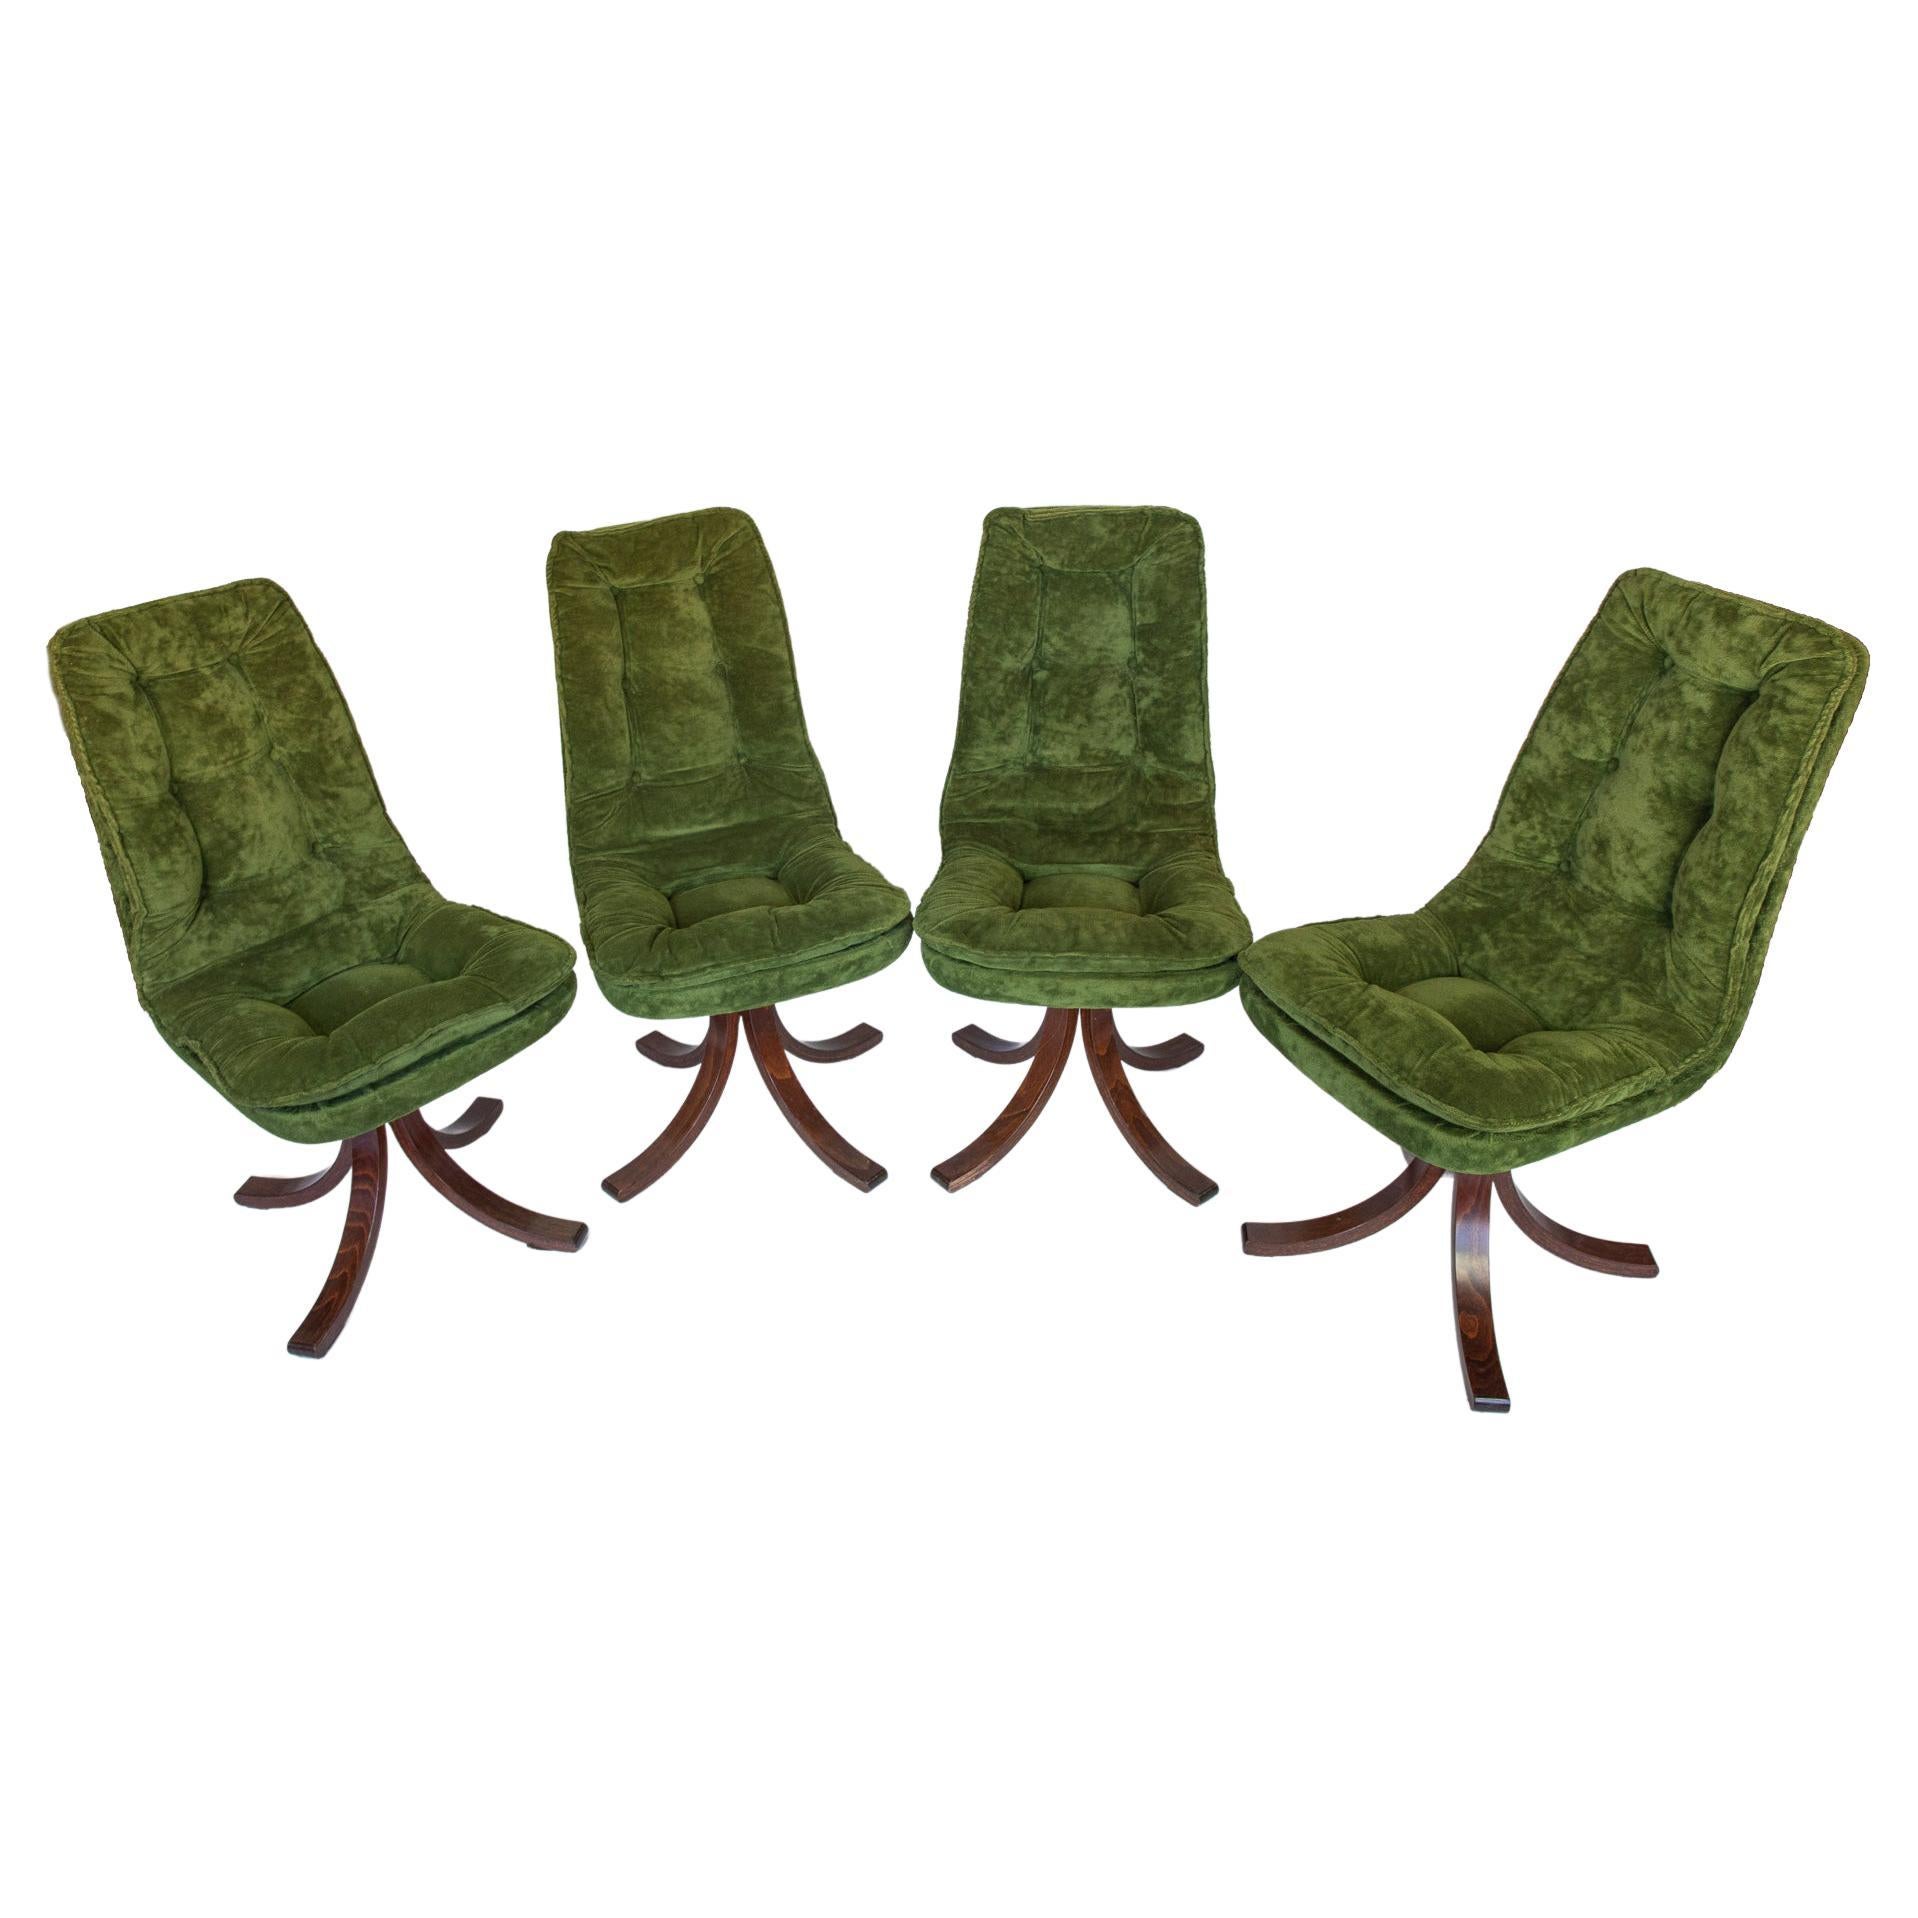 Mid Century Modern Dining Chairs in Green Velvet Upholstery, Italy, 1970s